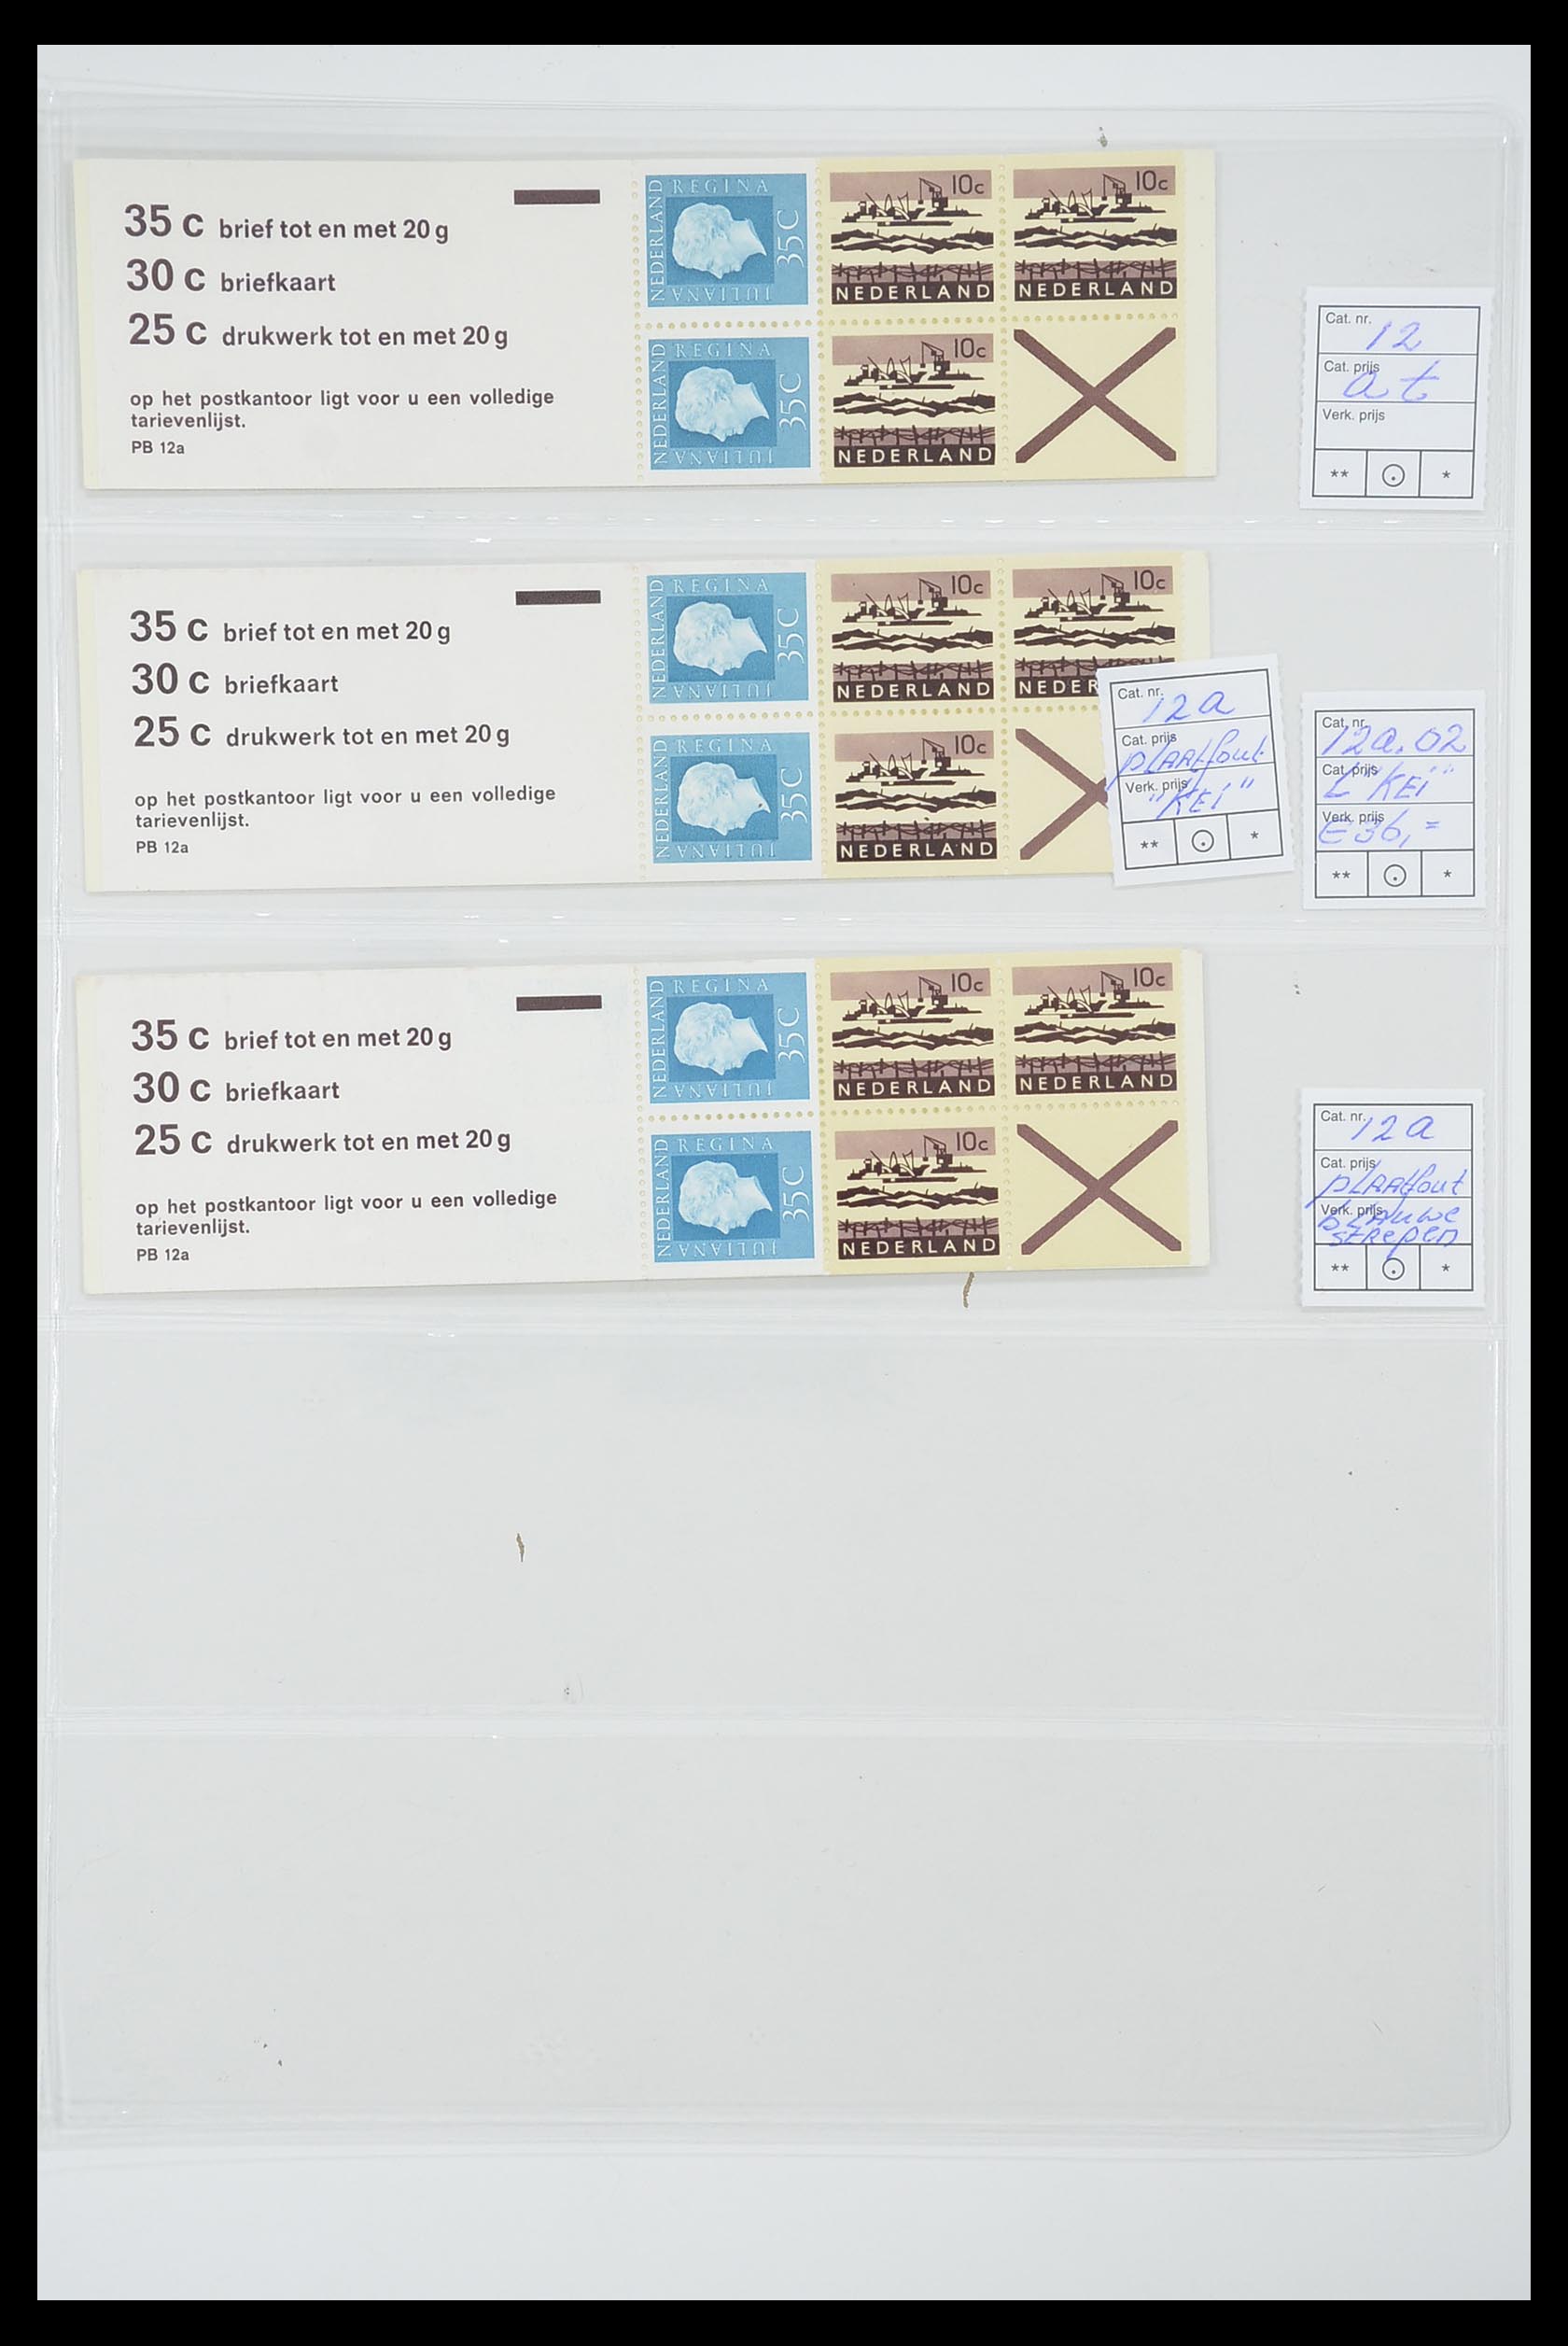 33815 044 - Stamp collection 33815 Netherlands stamp booklets 1964-2001.